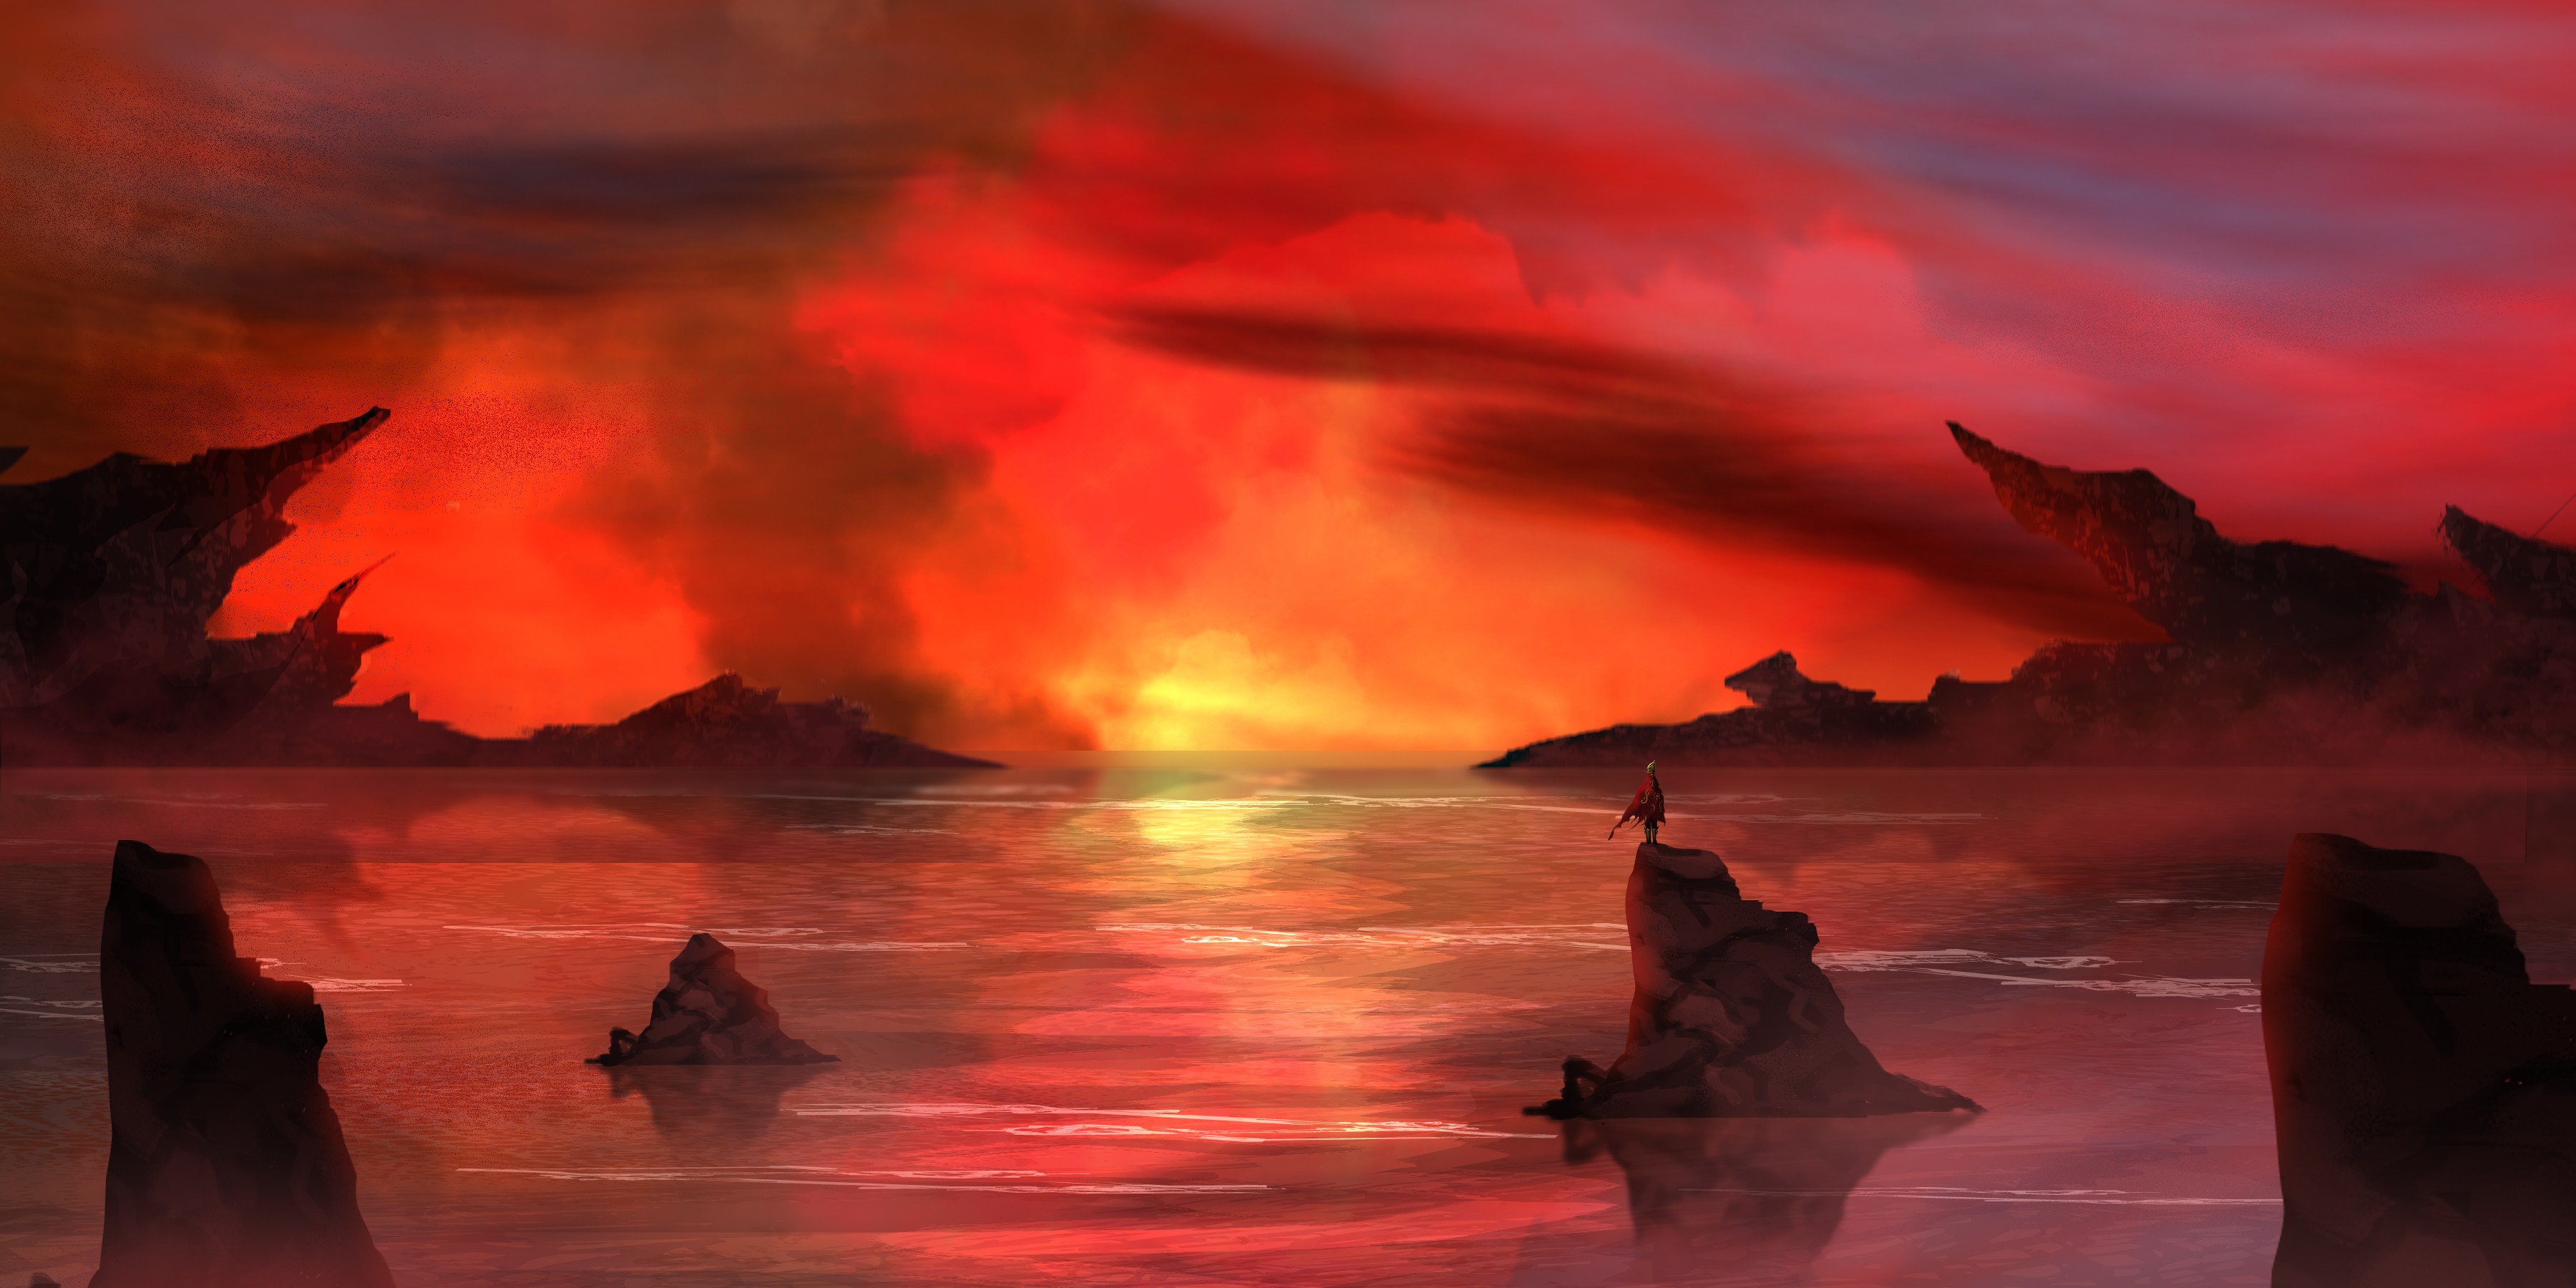 General 3600x1800 red fire smoke water river fantasy art DeviantArt digital art